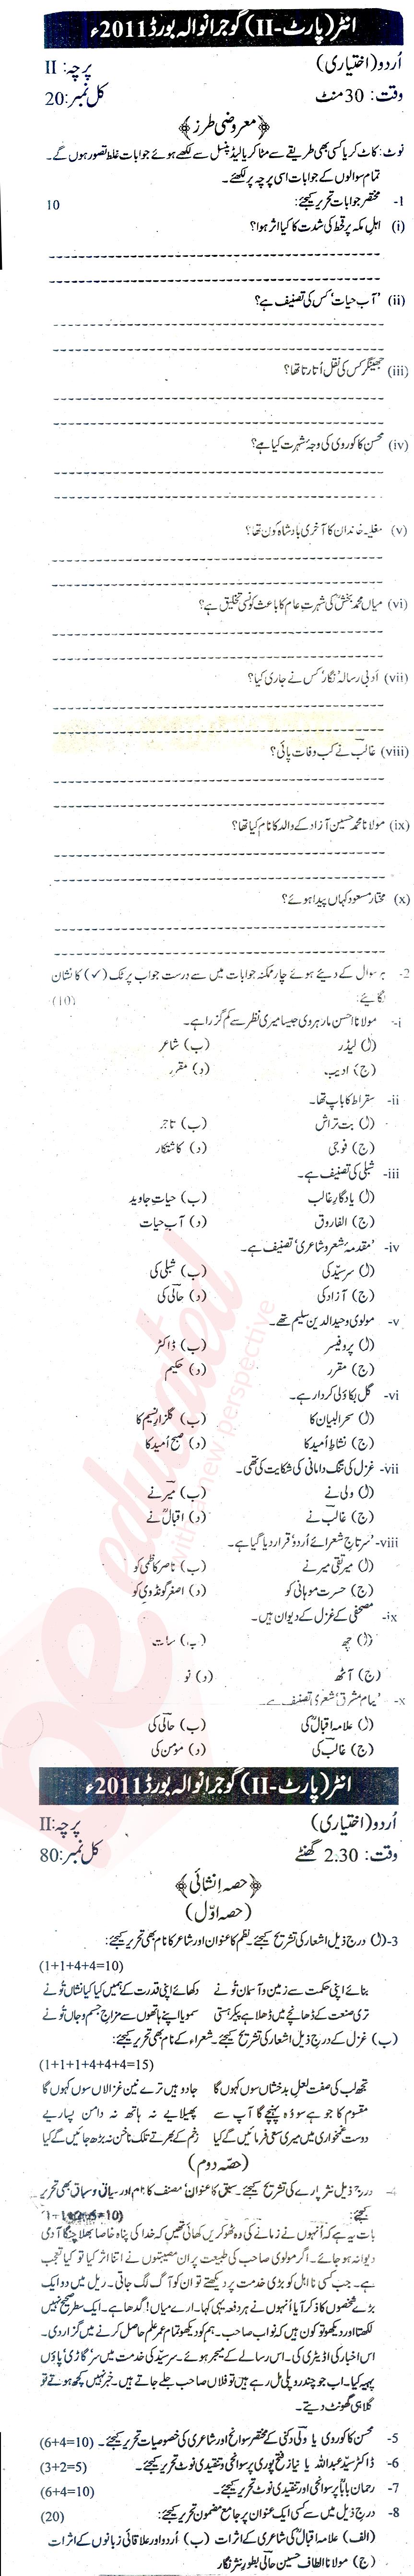 Urdu 12th class Past Paper Group 1 BISE Gujranwala 2011